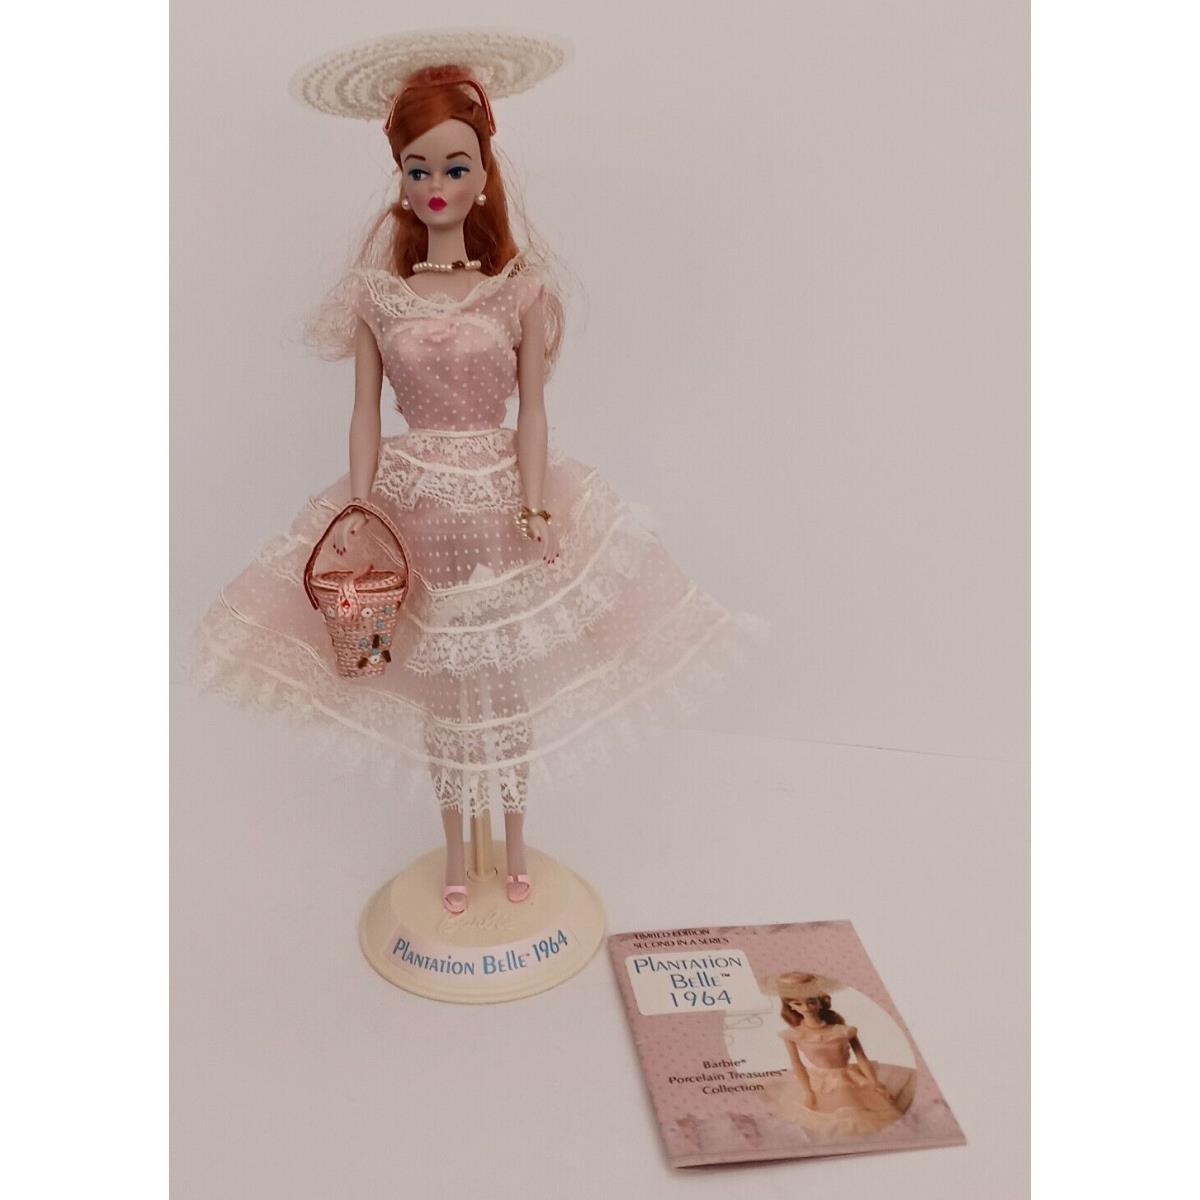 1991 Mattel 7526 Barbie Plantation Belle 1964 Porcelain Timeless Treasures Doll